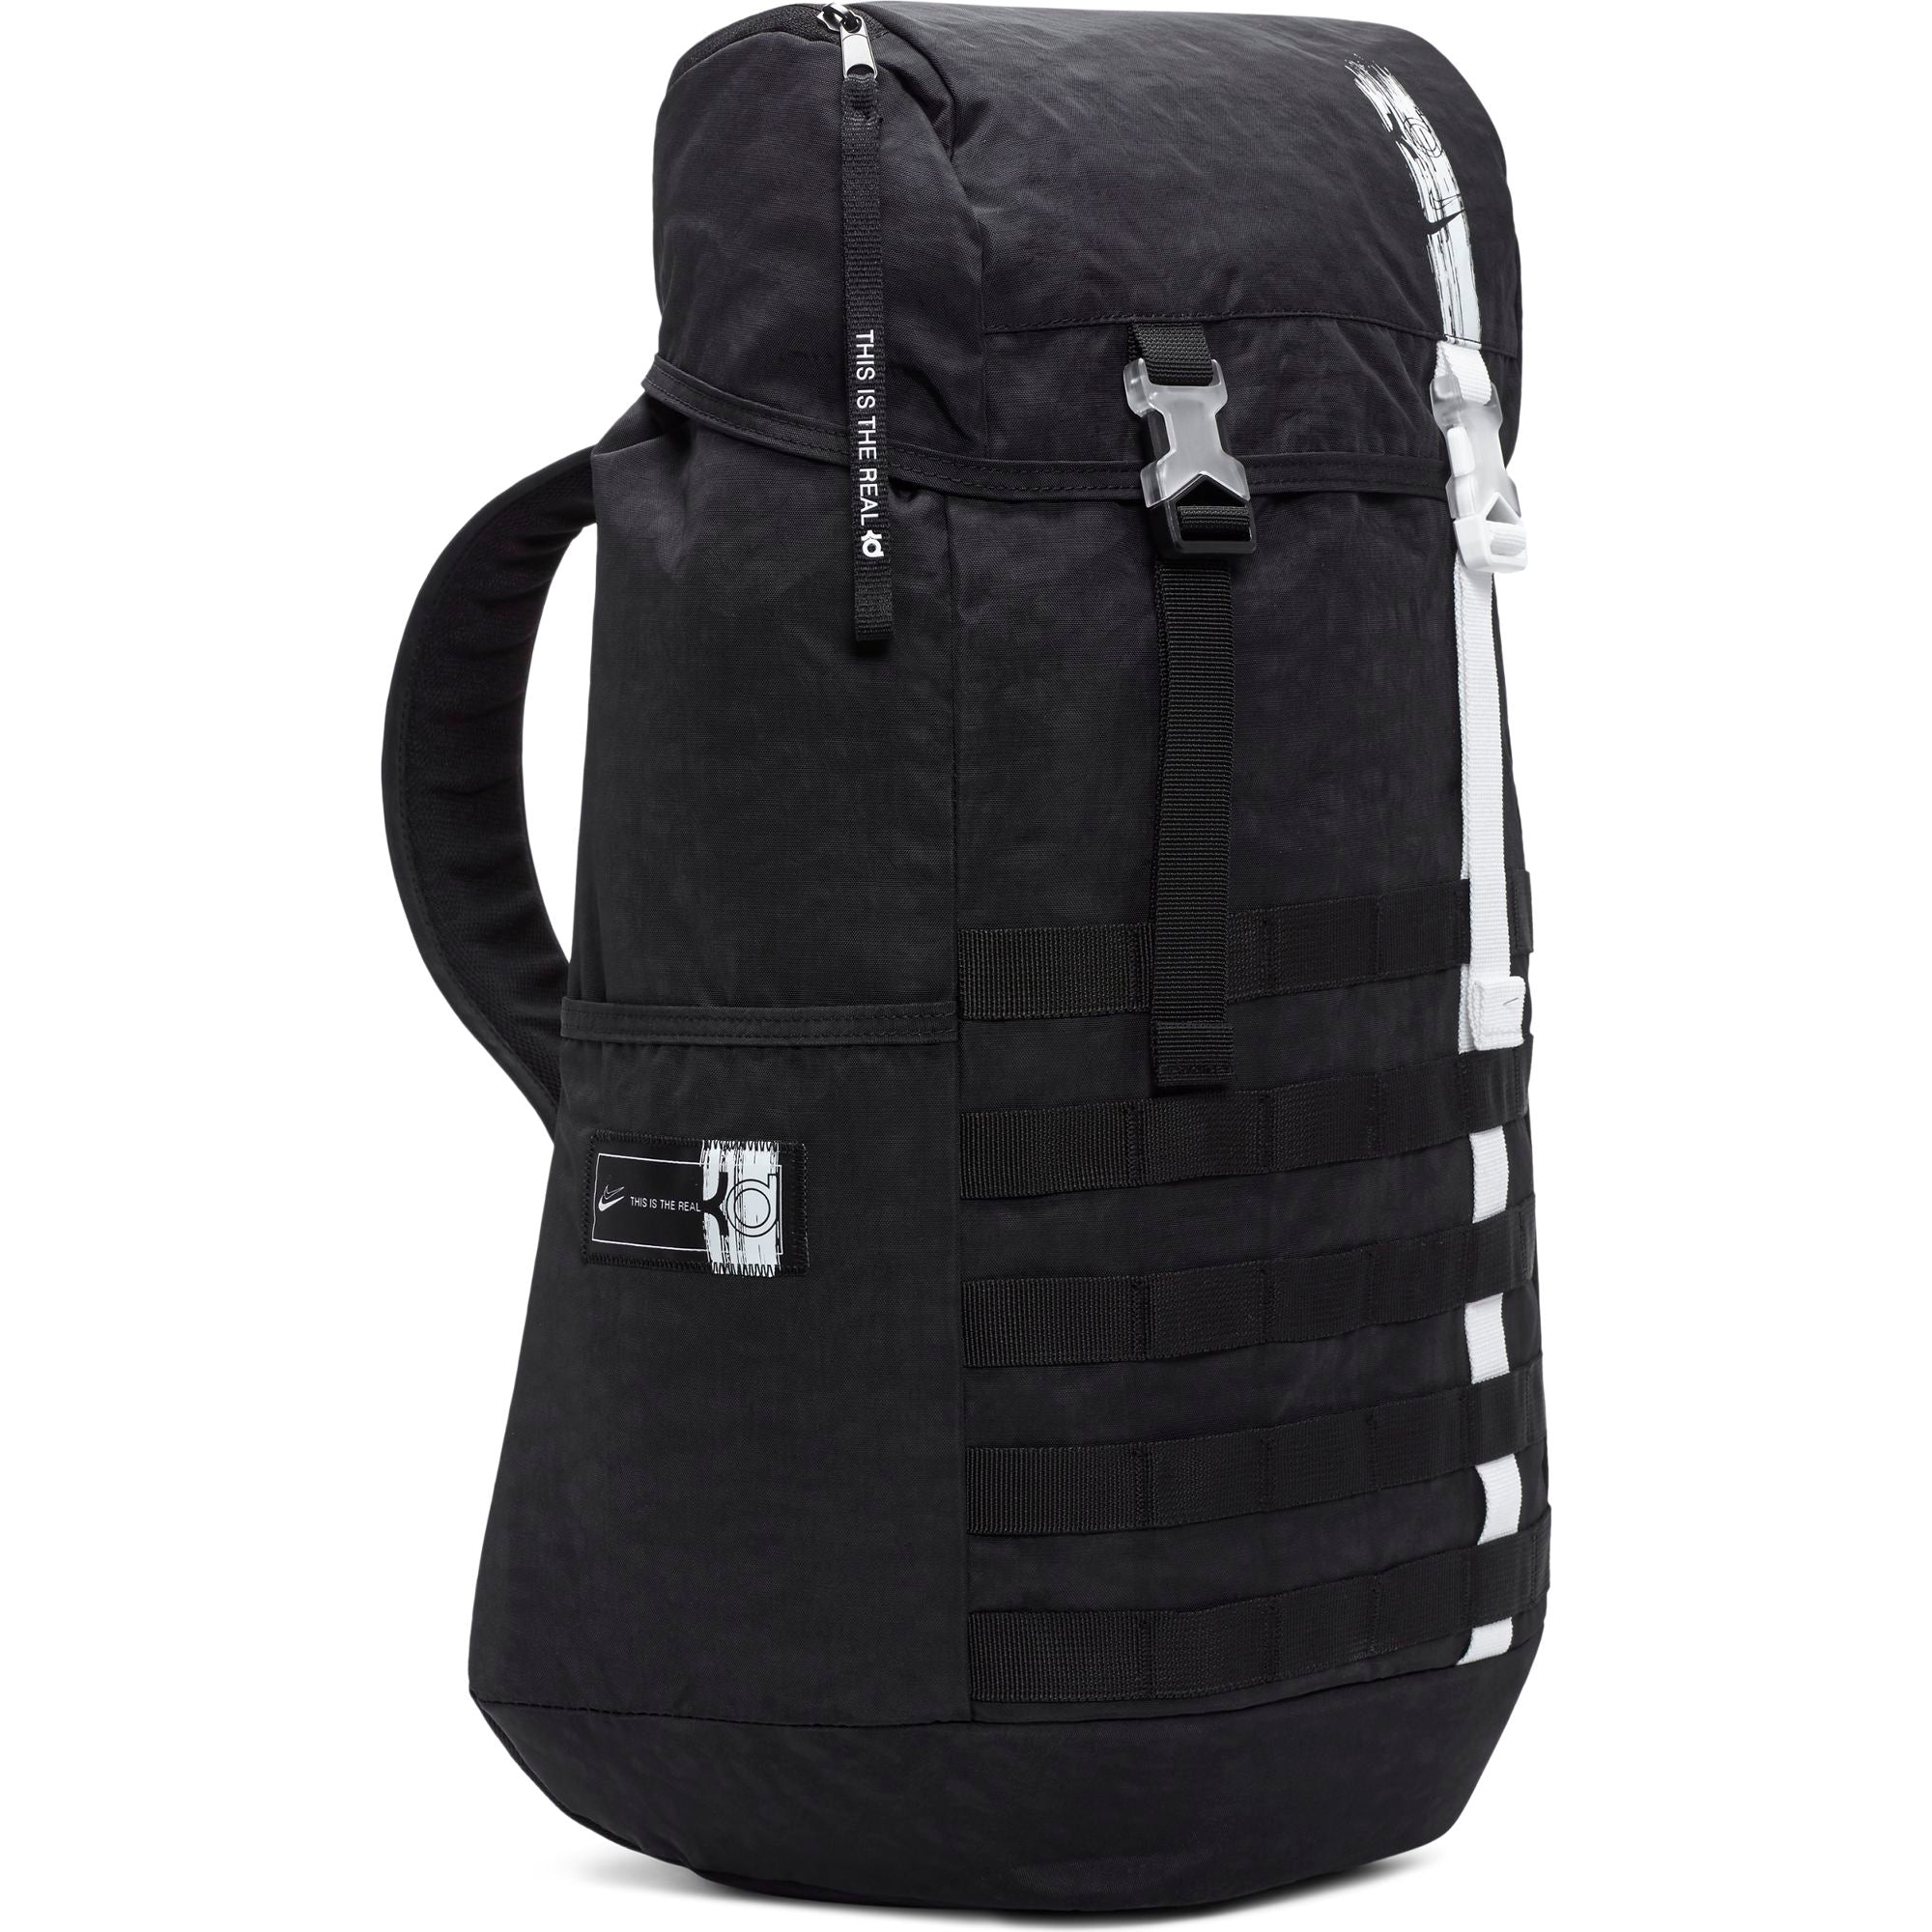 black basketball backpack